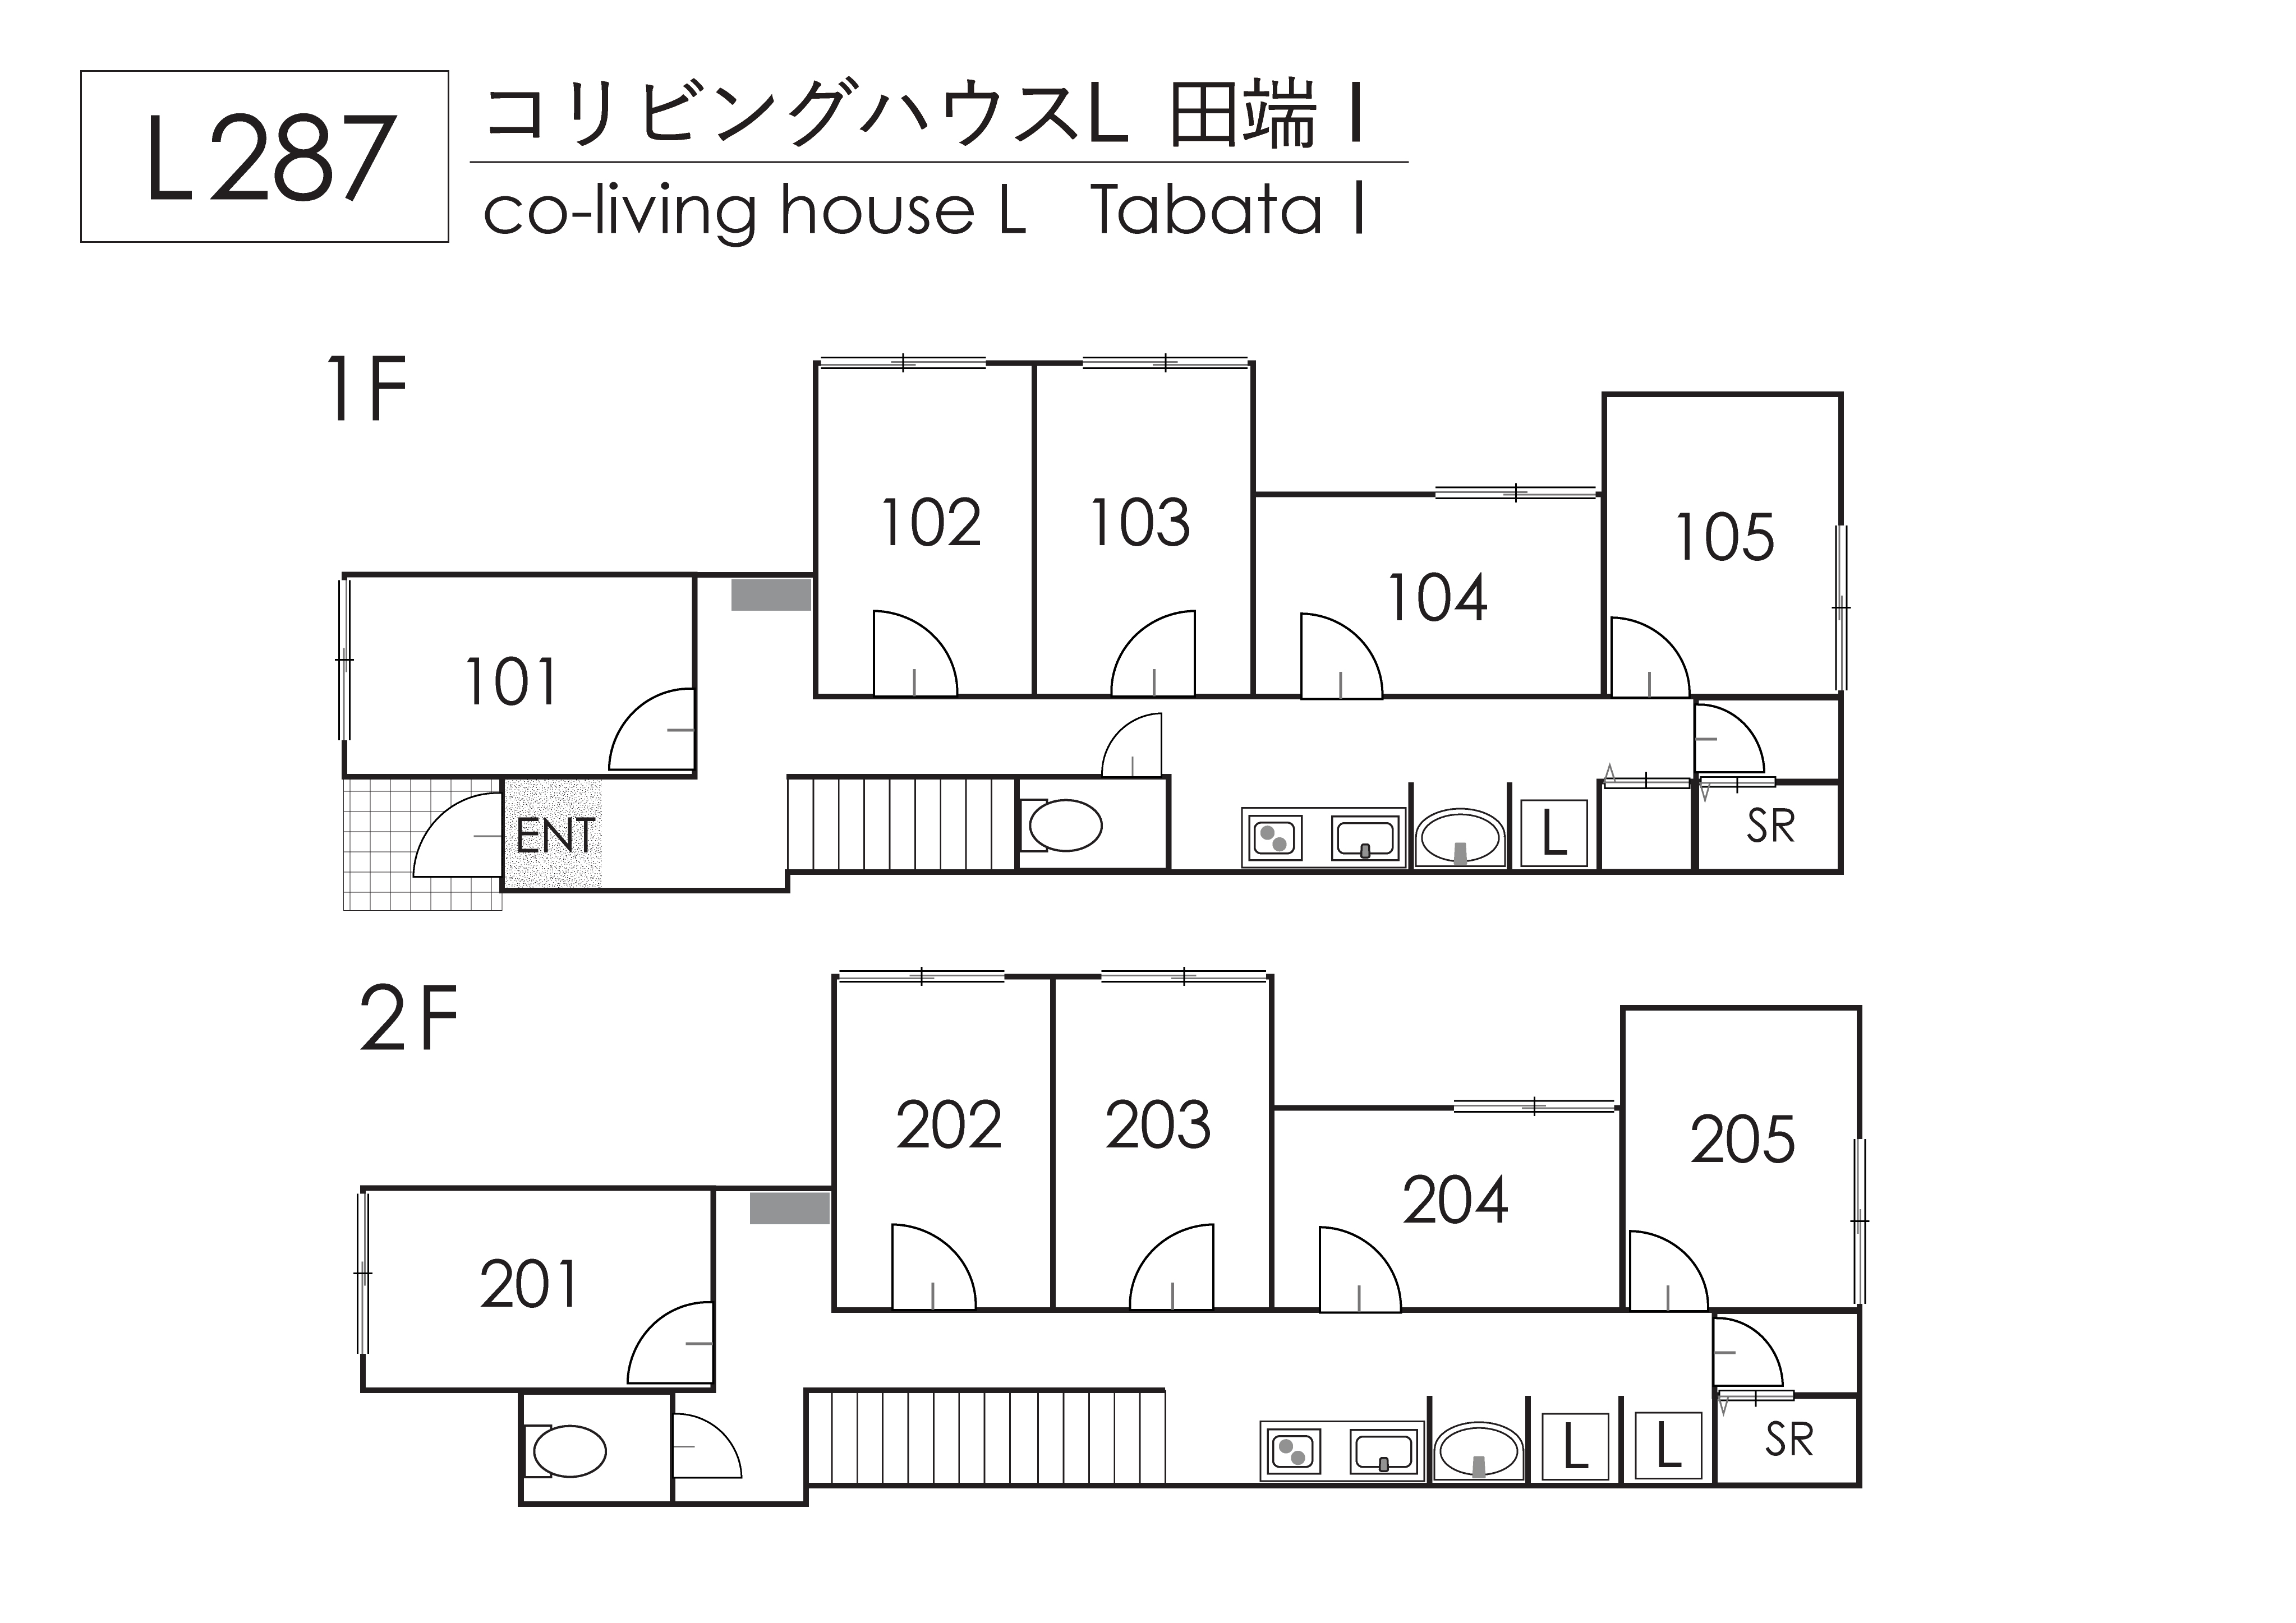 L287 Tokyoβ Tabata 1 (co-living house L TabataⅣ)間取り図